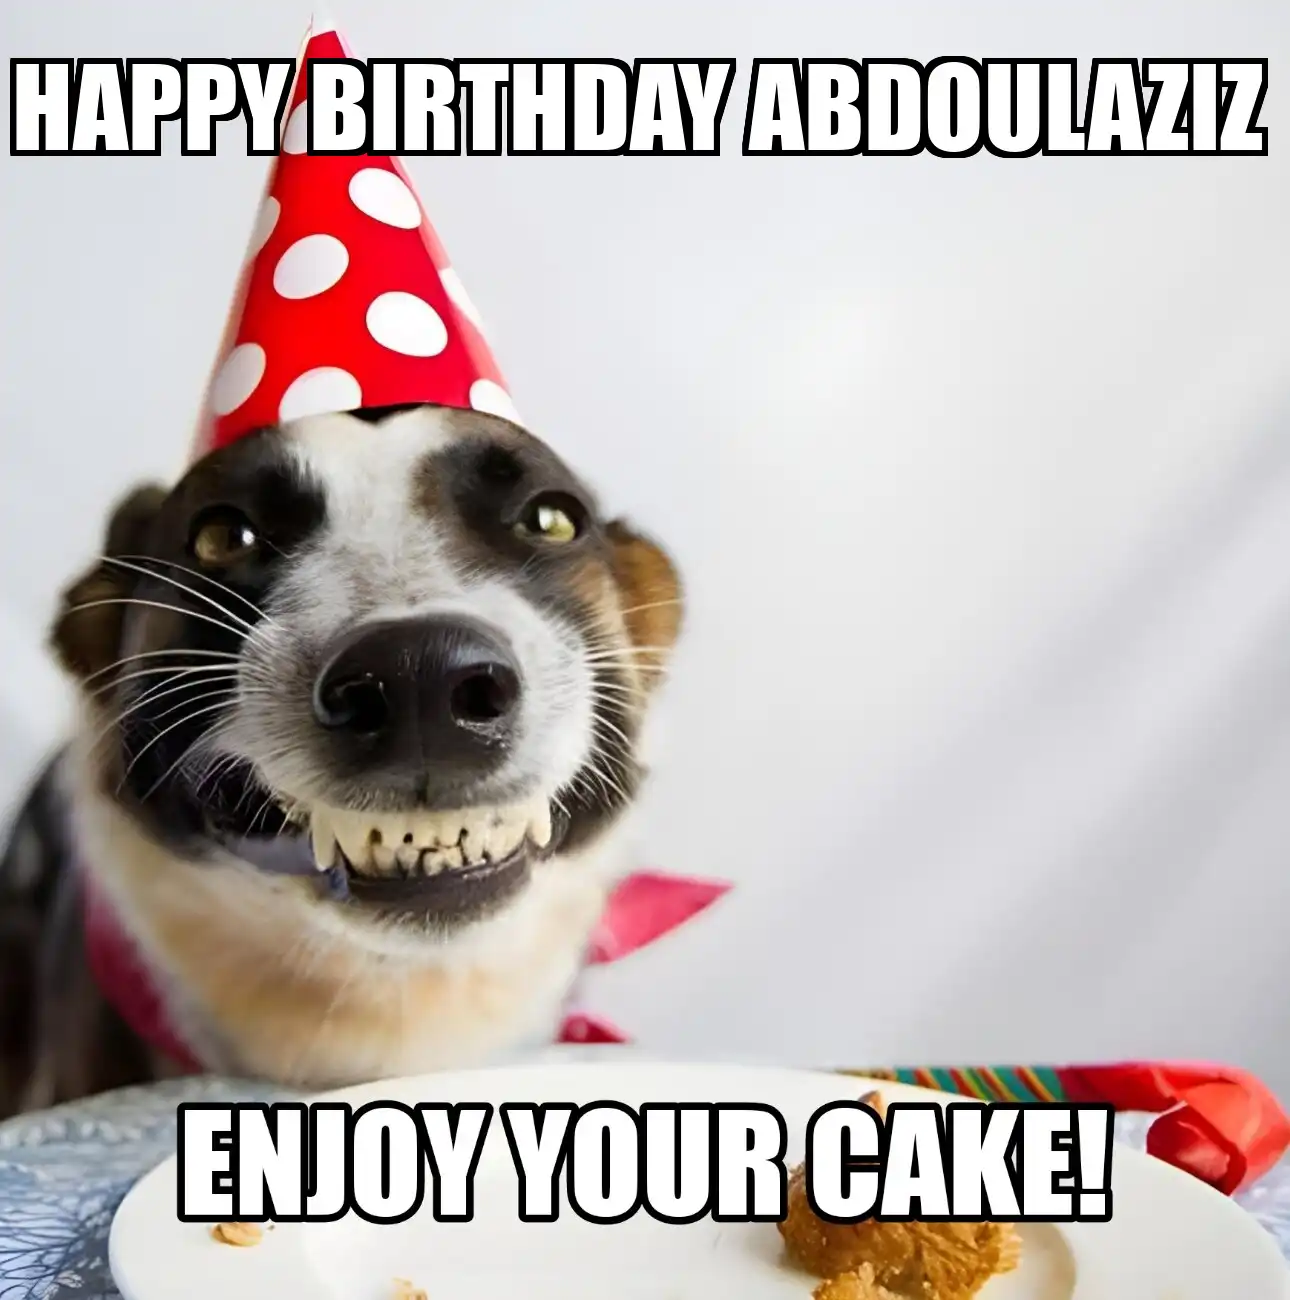 Happy Birthday Abdoulaziz Enjoy Your Cake Dog Meme